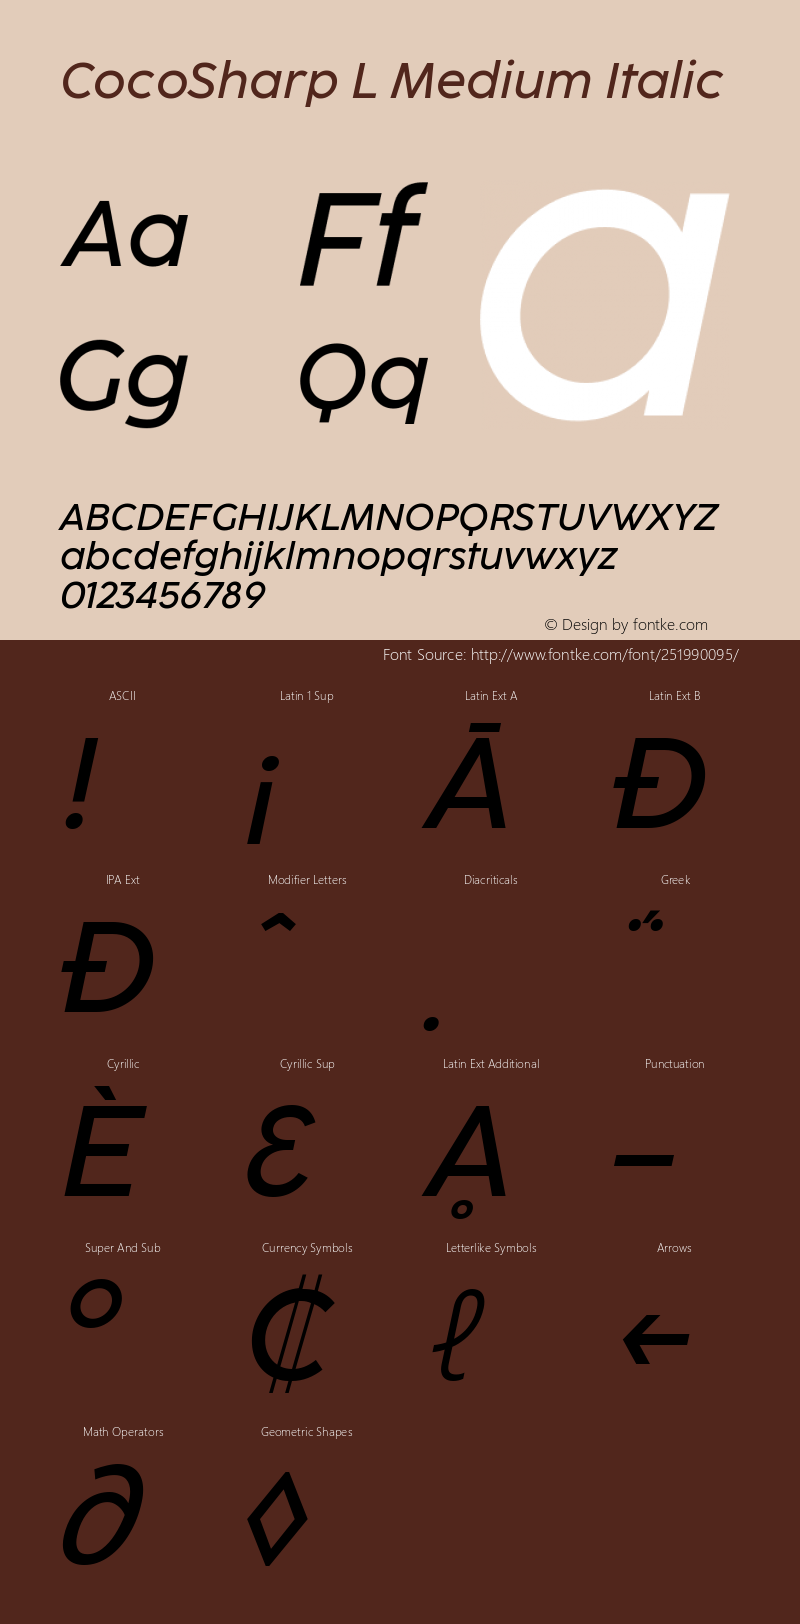 CocoSharp L Medium Italic Version 1.002图片样张